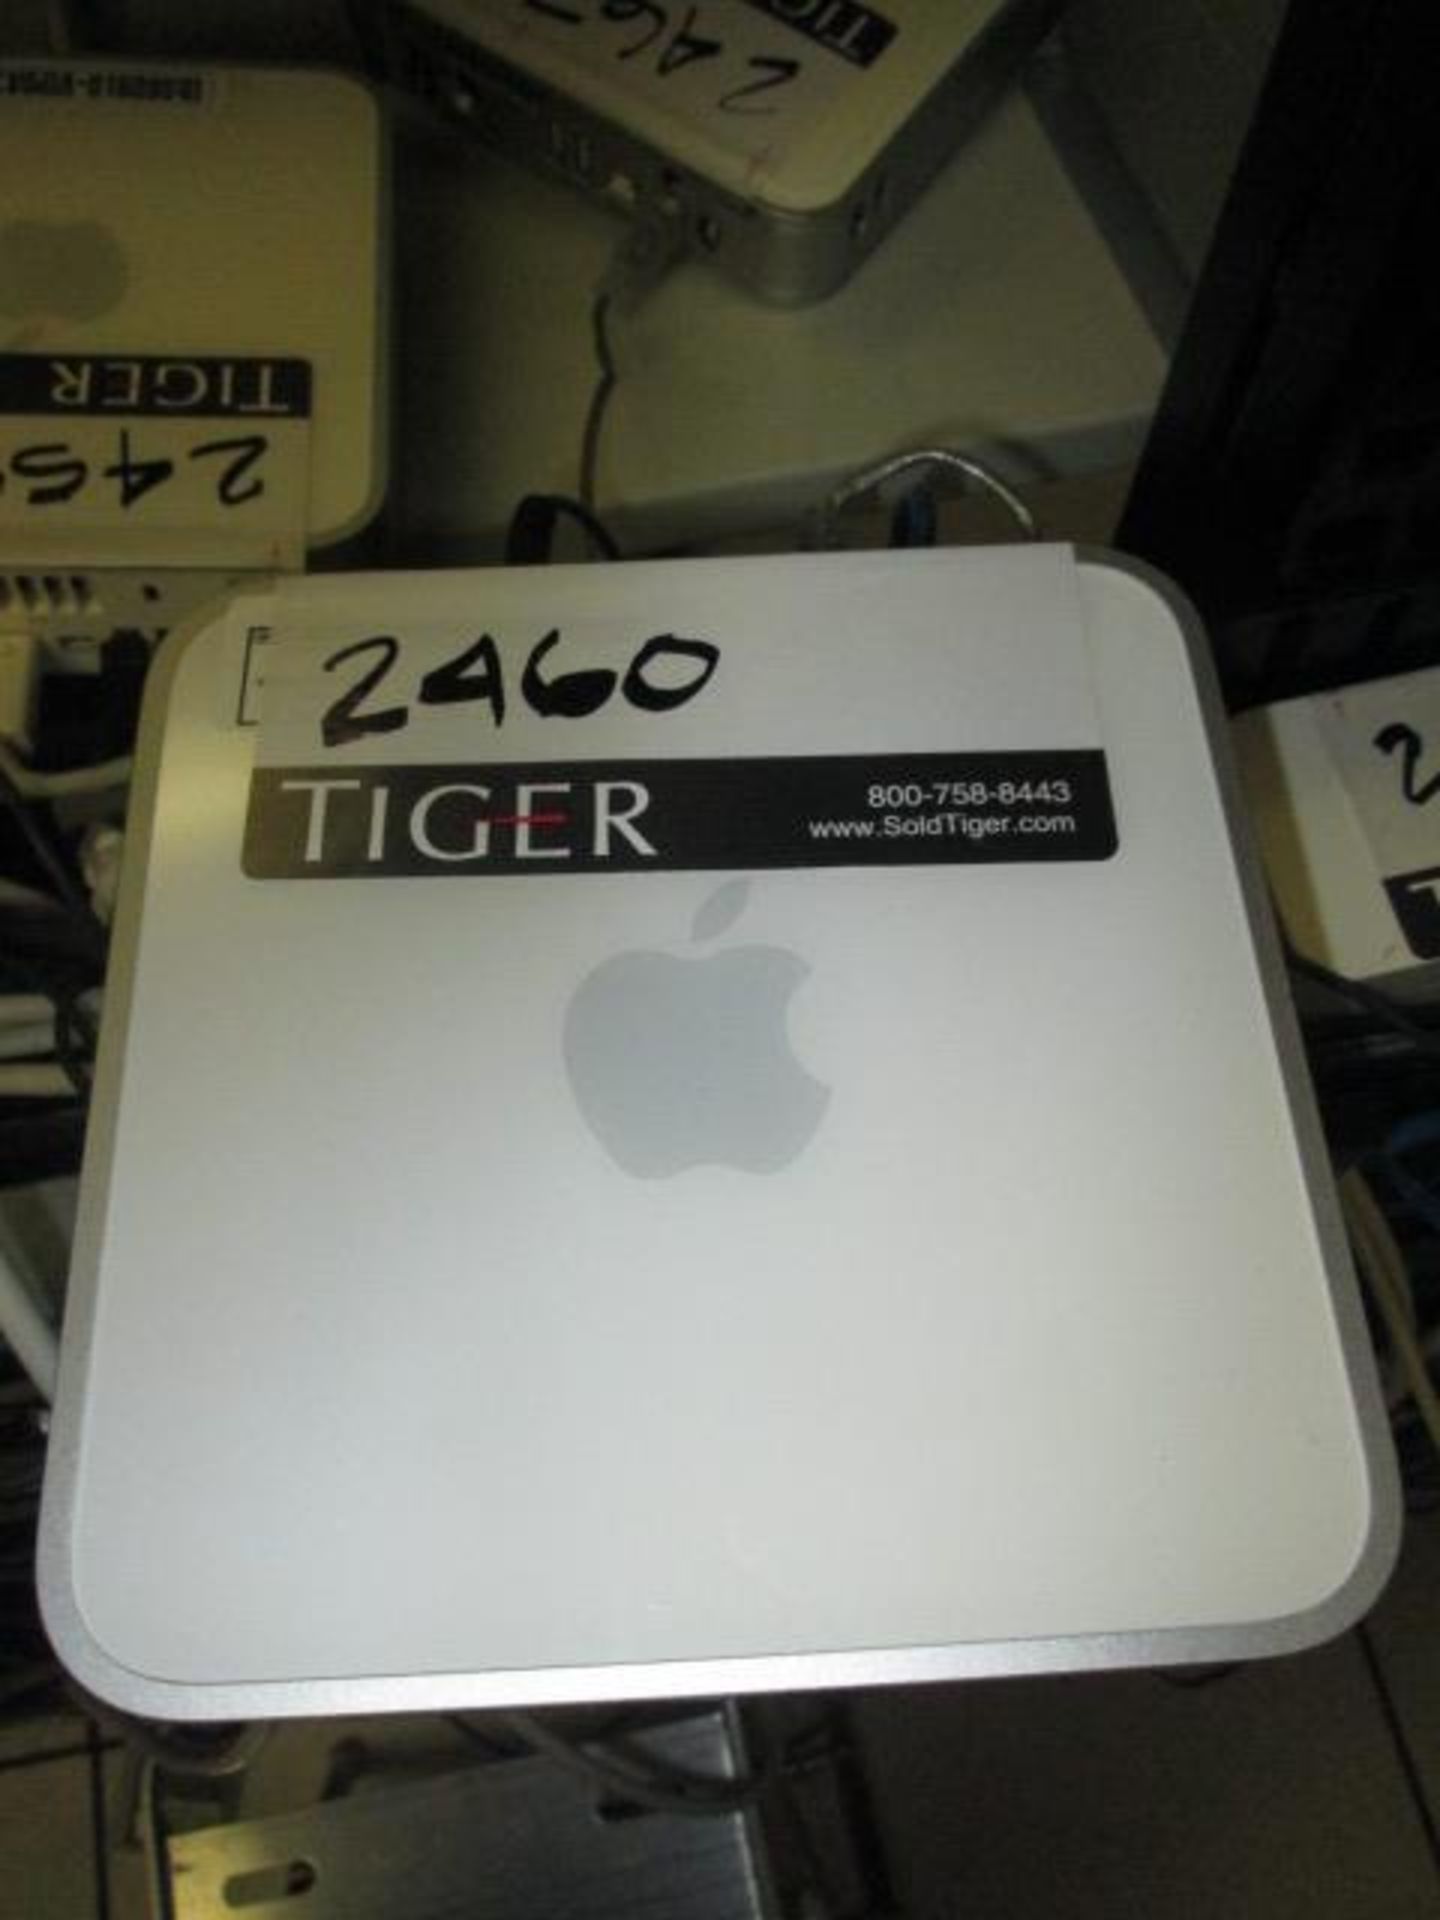 Apple Mac Mini, 2.26 Ghz Intel Core 2 Duo Processor, 3MB Shared L2 Cache, 160GB Serial ATA Hard